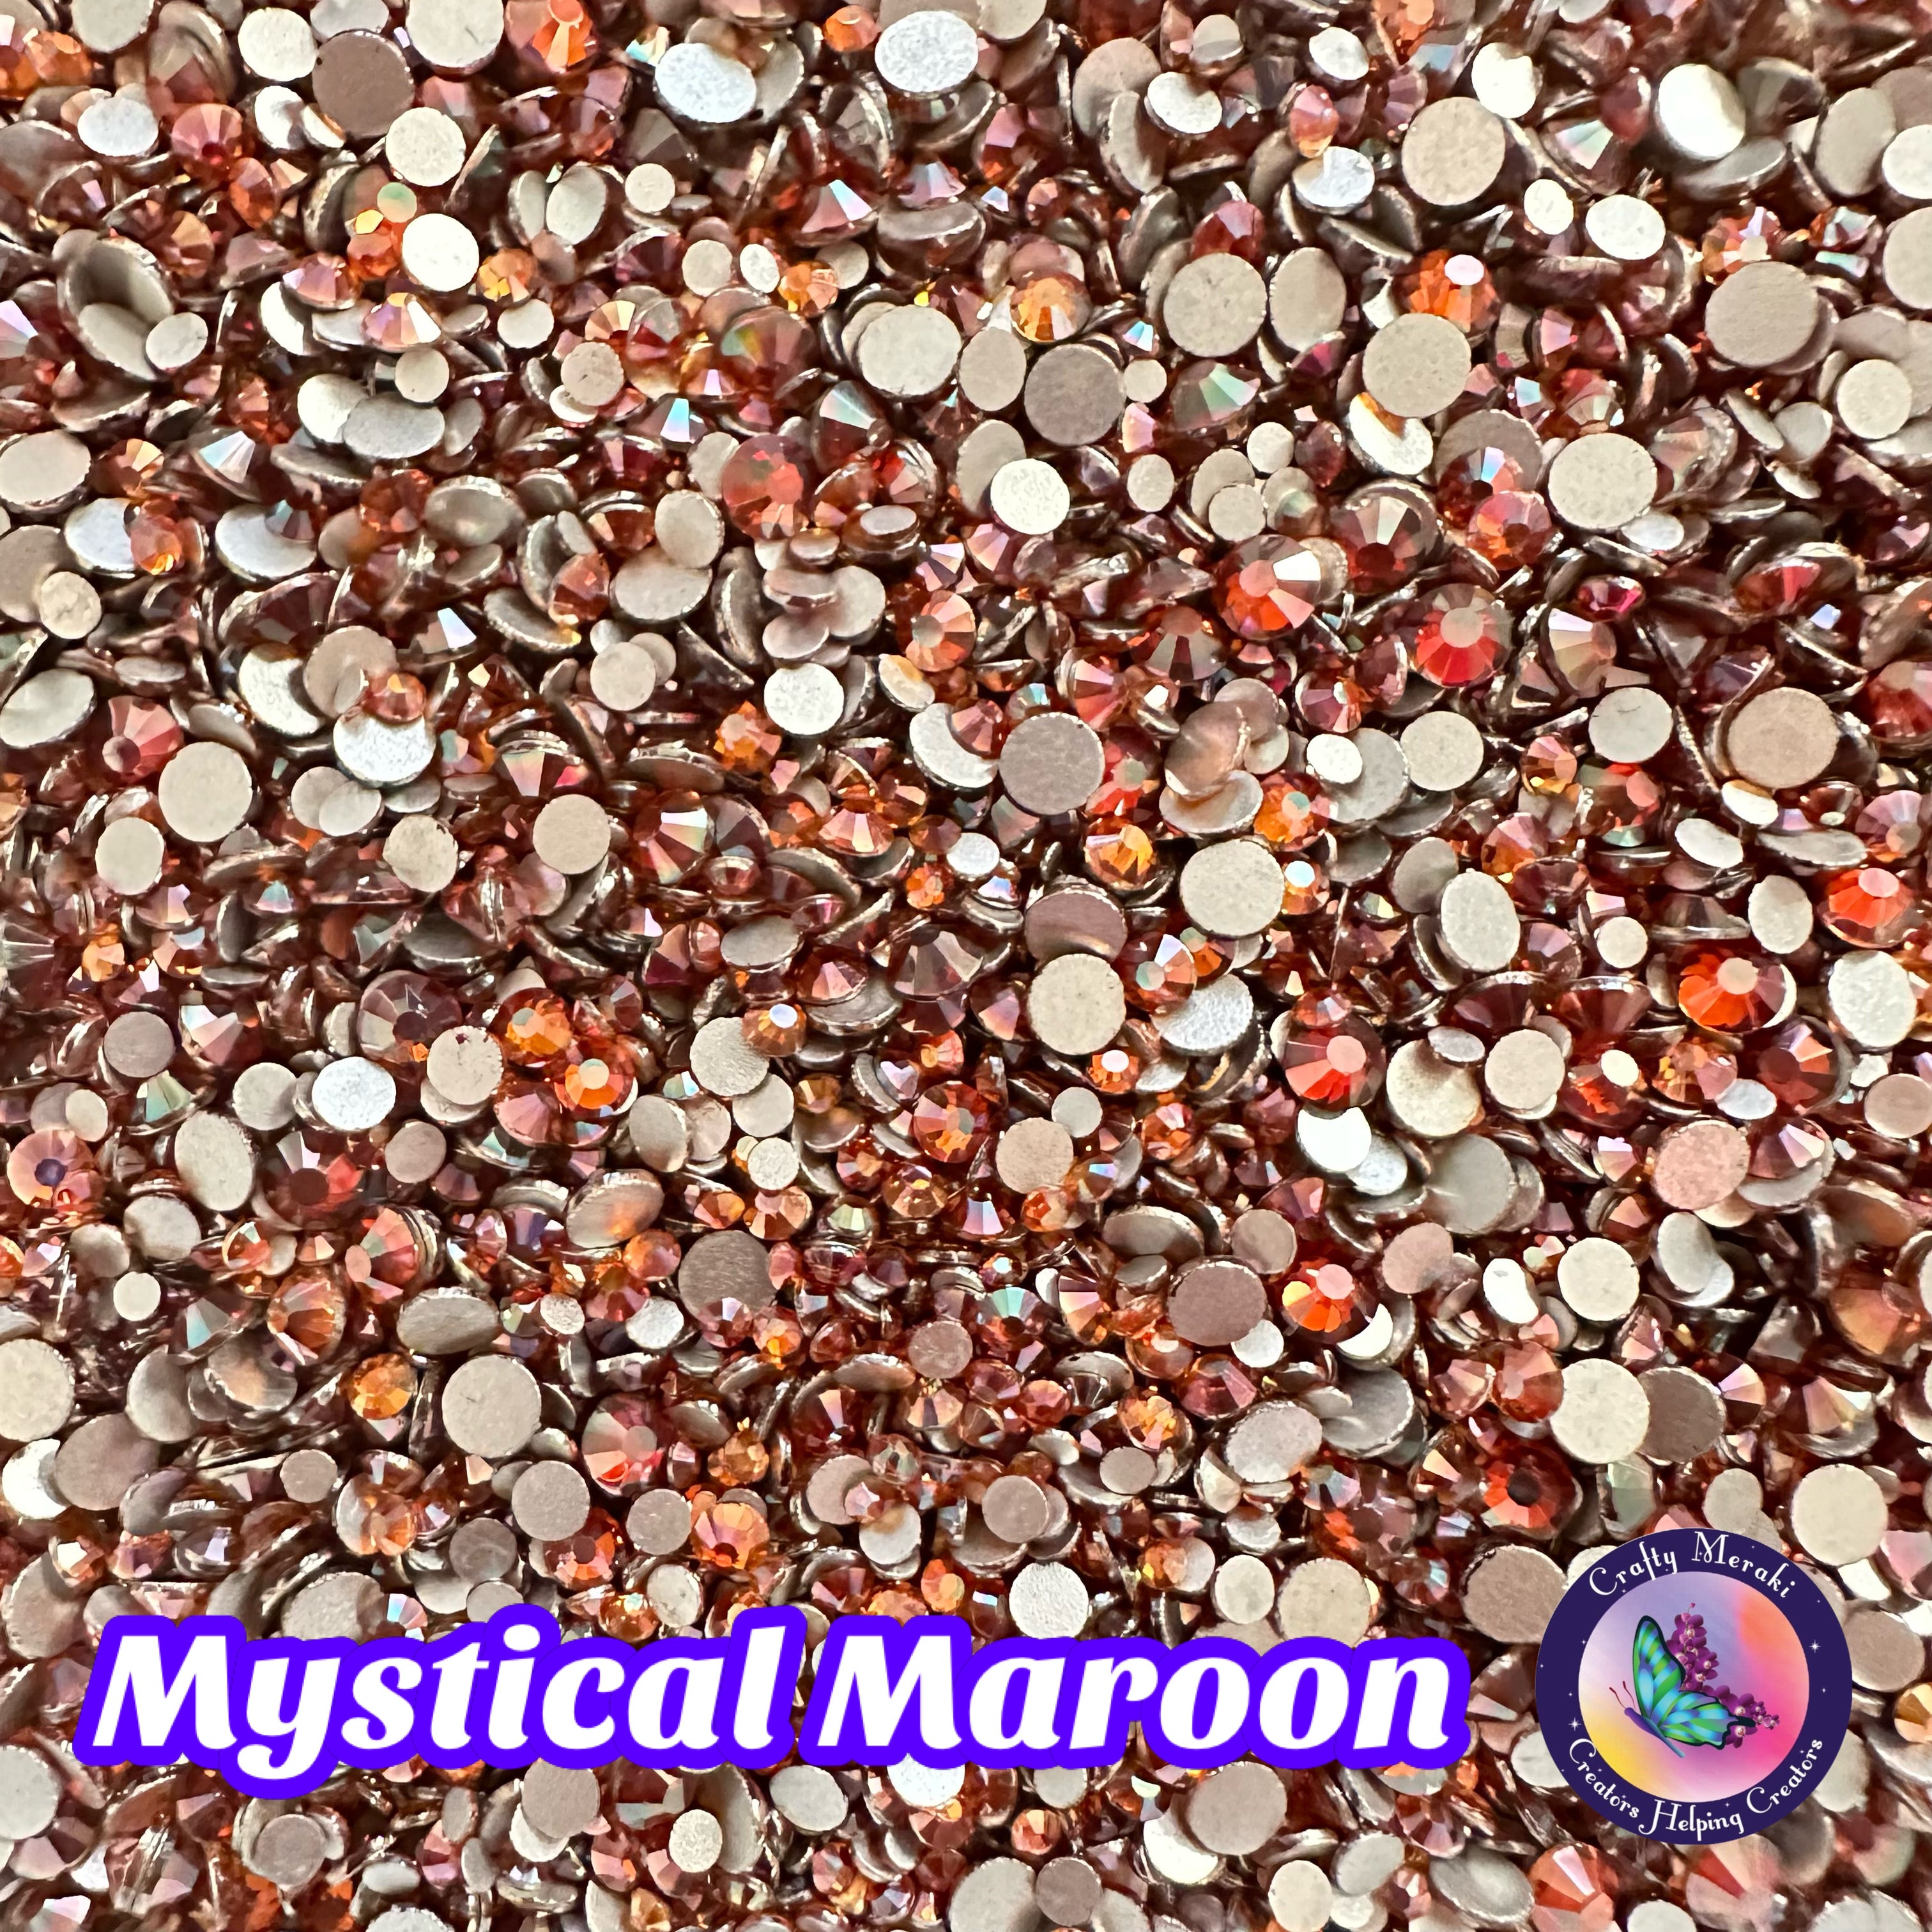 Meraki Sparkle Mystical Maroon Illusion - Crafty Meraki